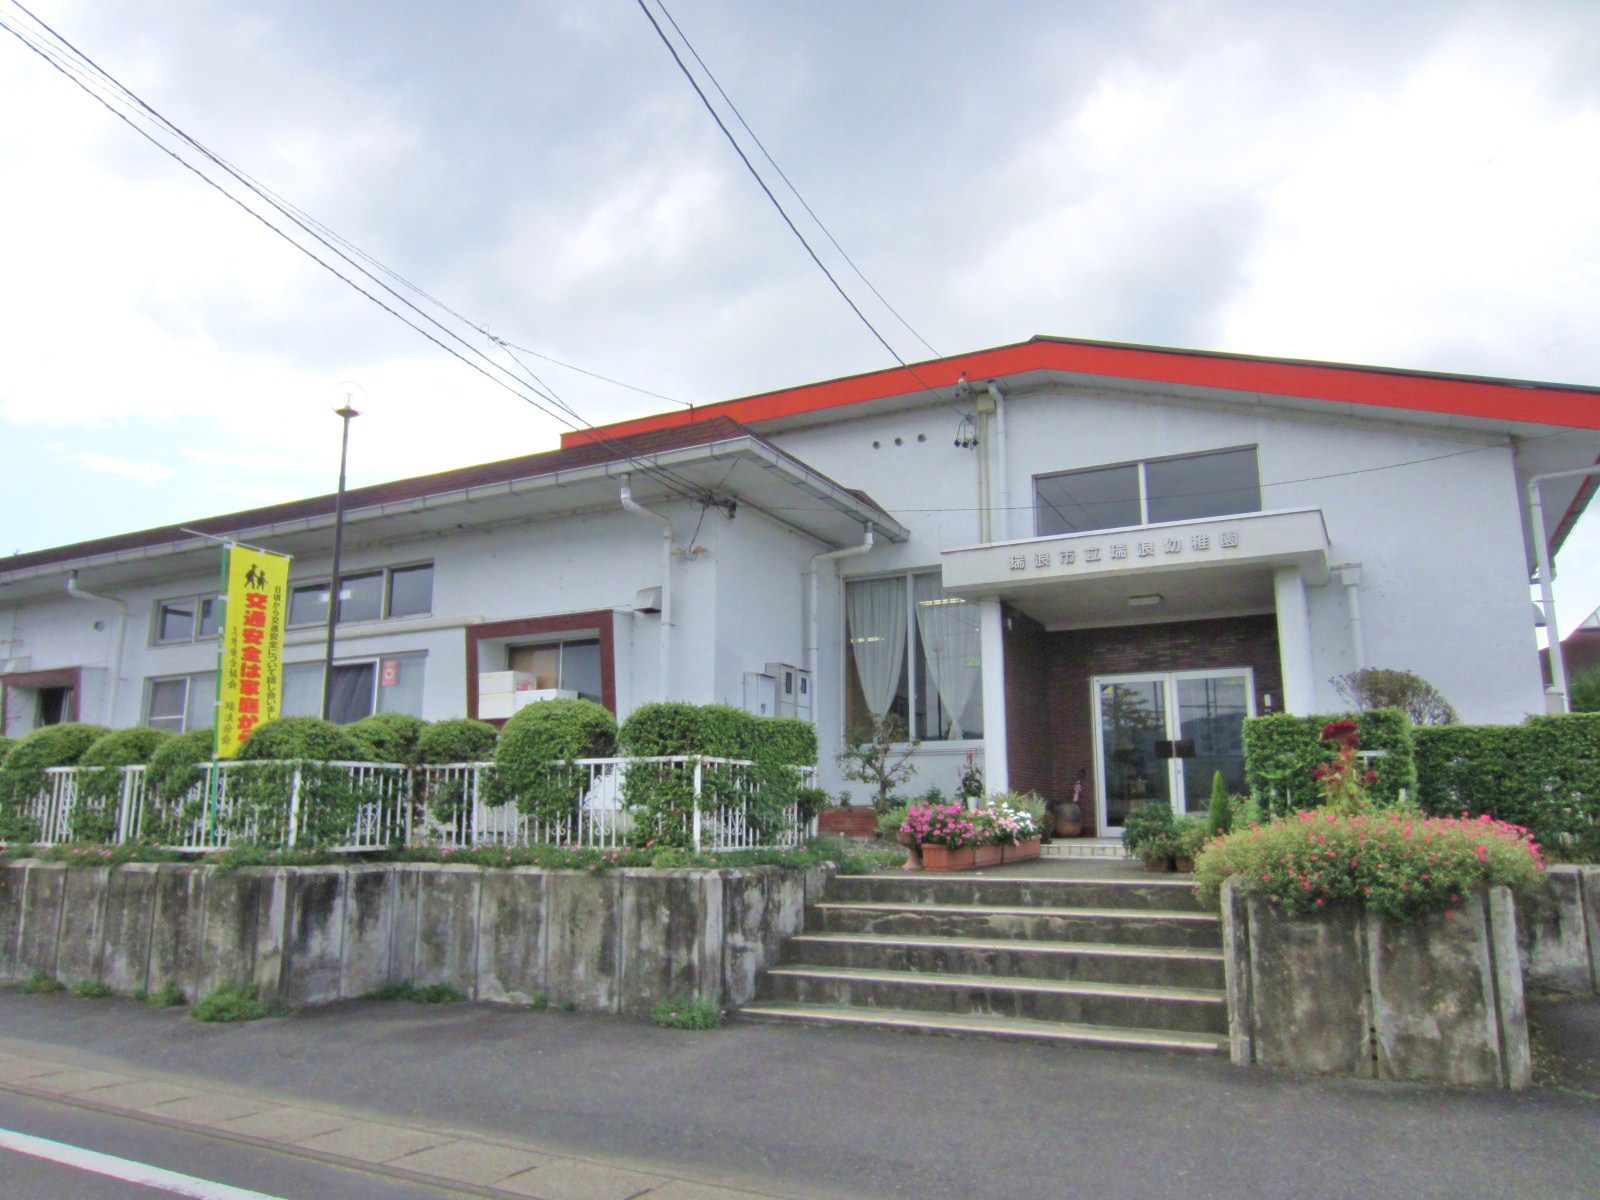 kindergarten ・ Nursery. Mizunami Municipal Mizunami kindergarten (kindergarten ・ 503m to the nursery)